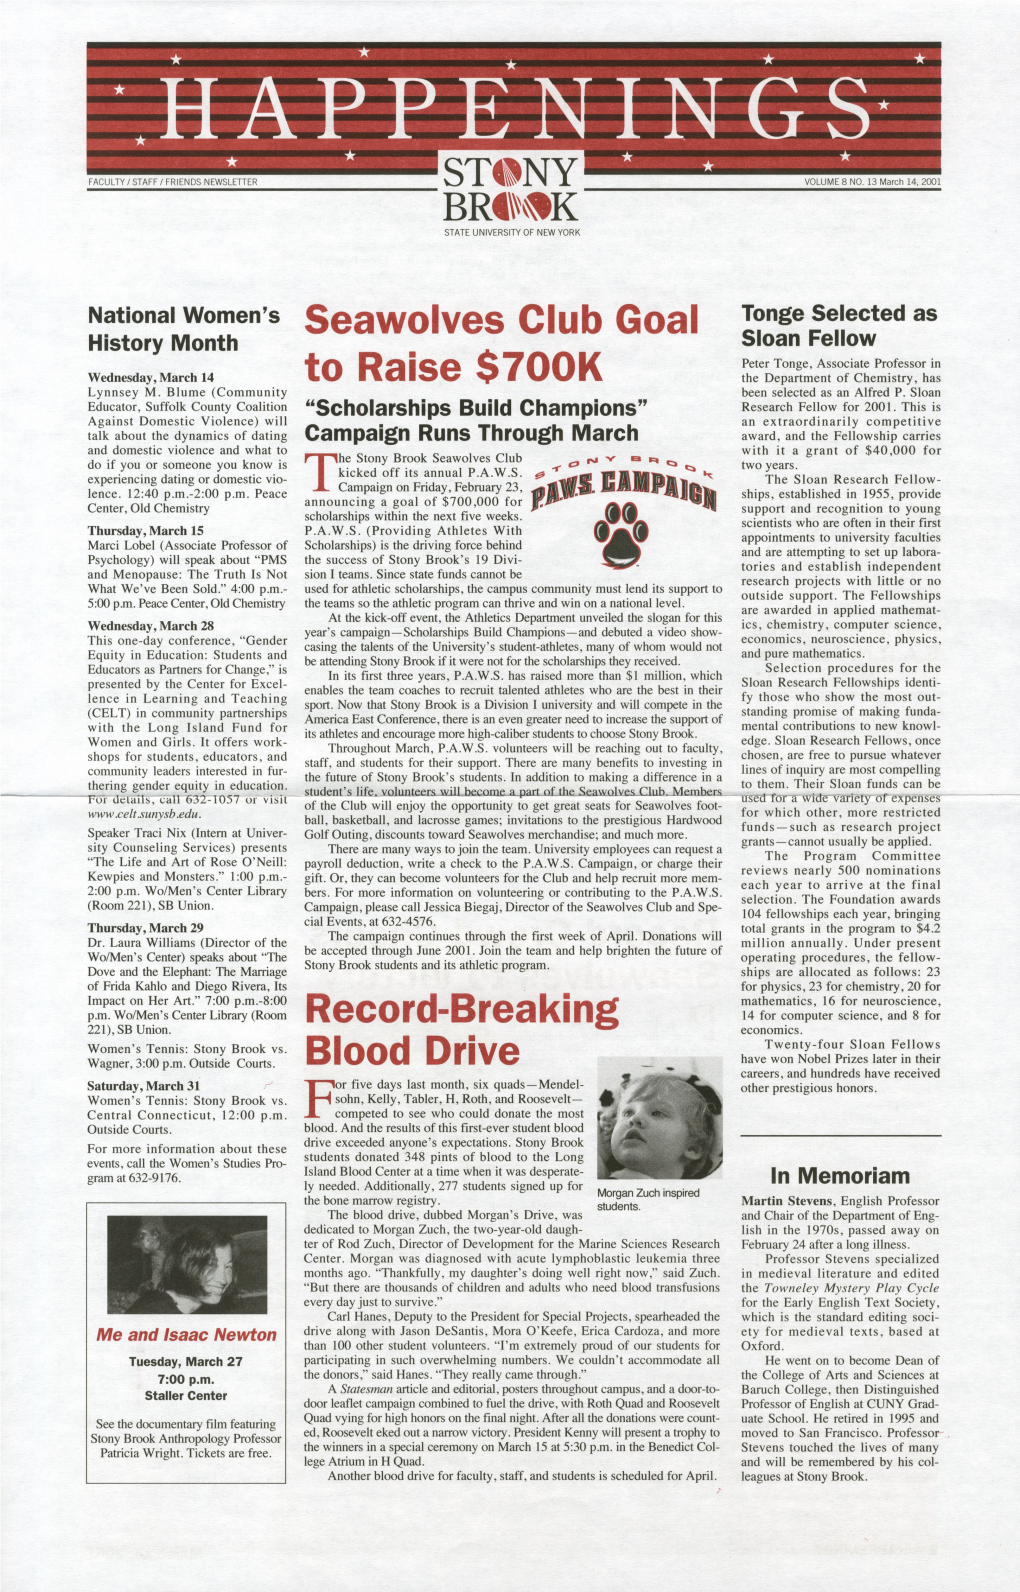 Seawolves Club Goal to Raise $700K Record-Breaking Blood Drive